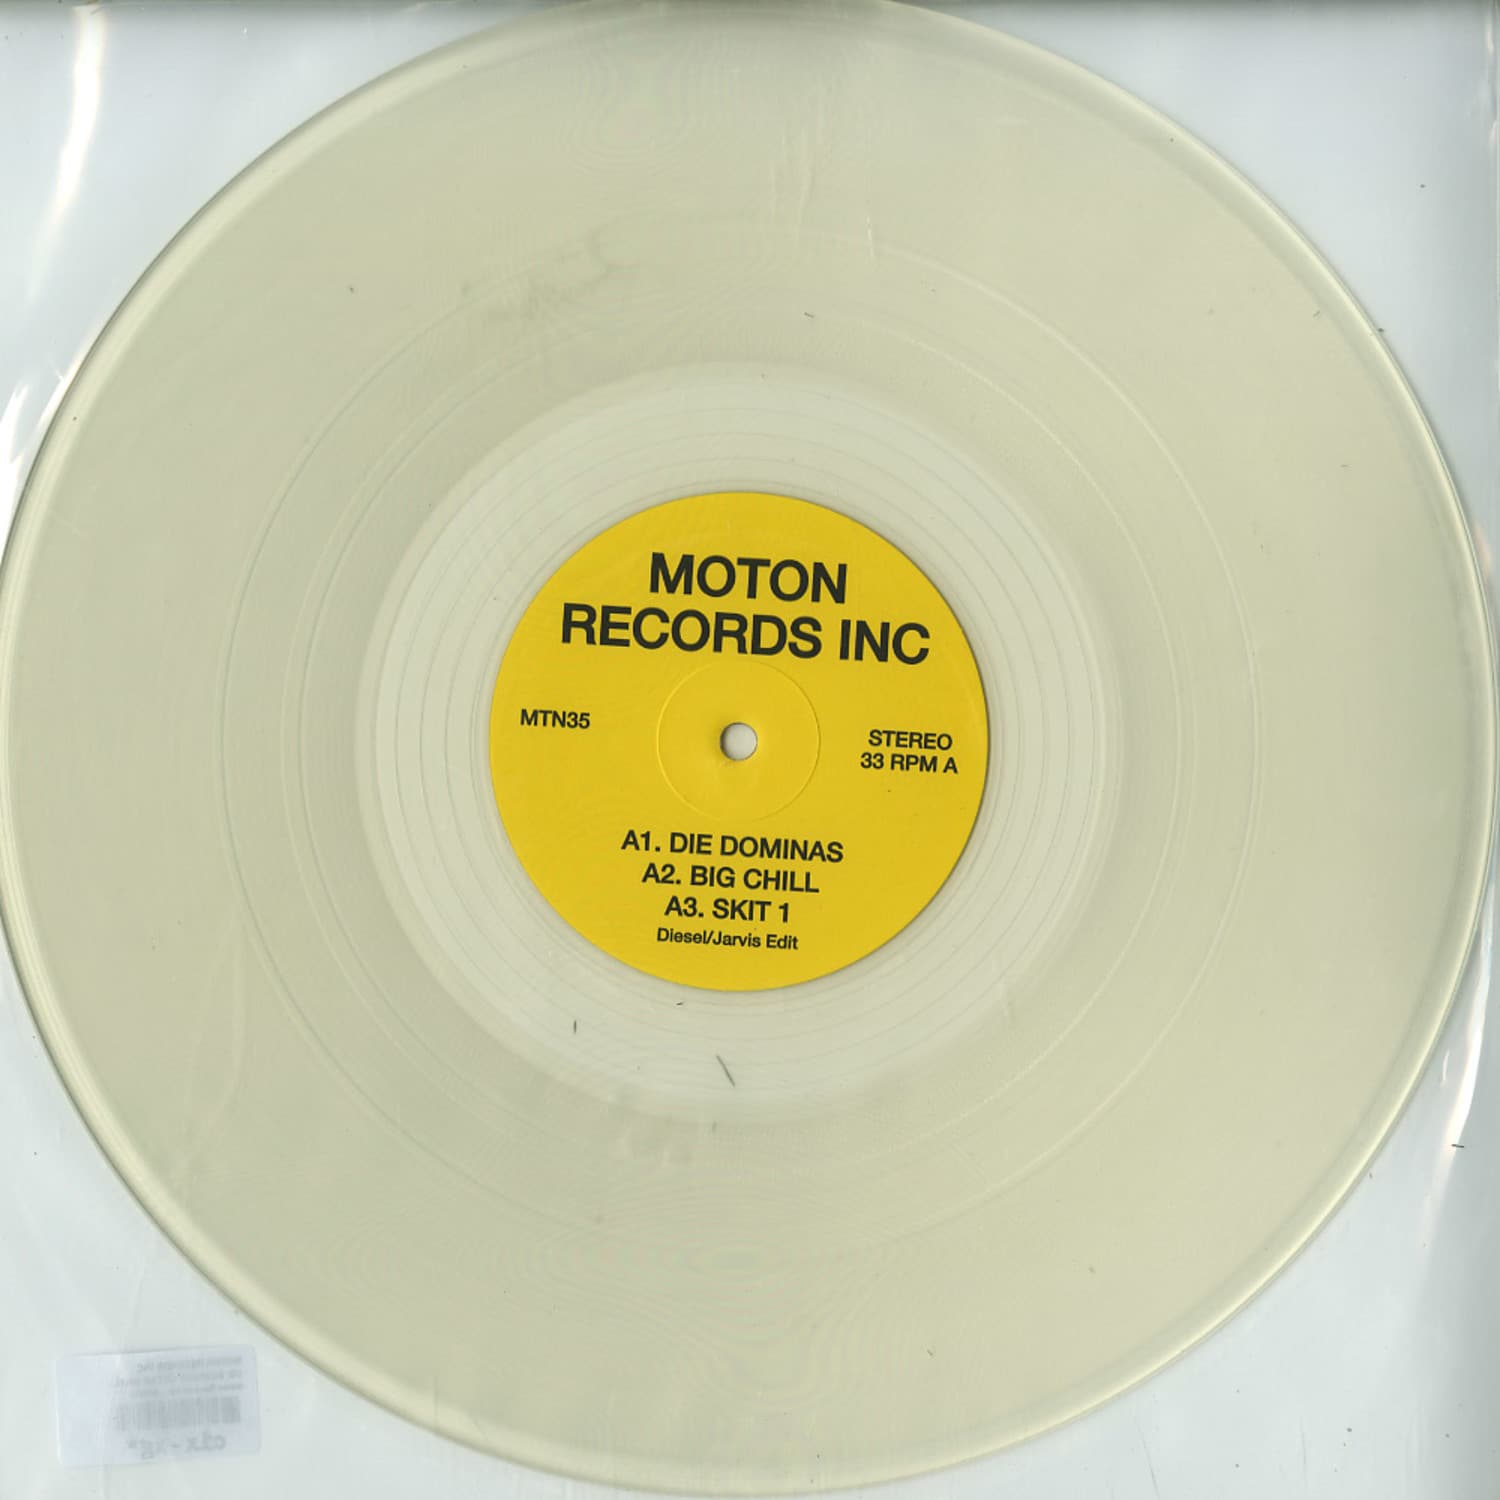 Moton Records Inc - DIE DOMINAS 